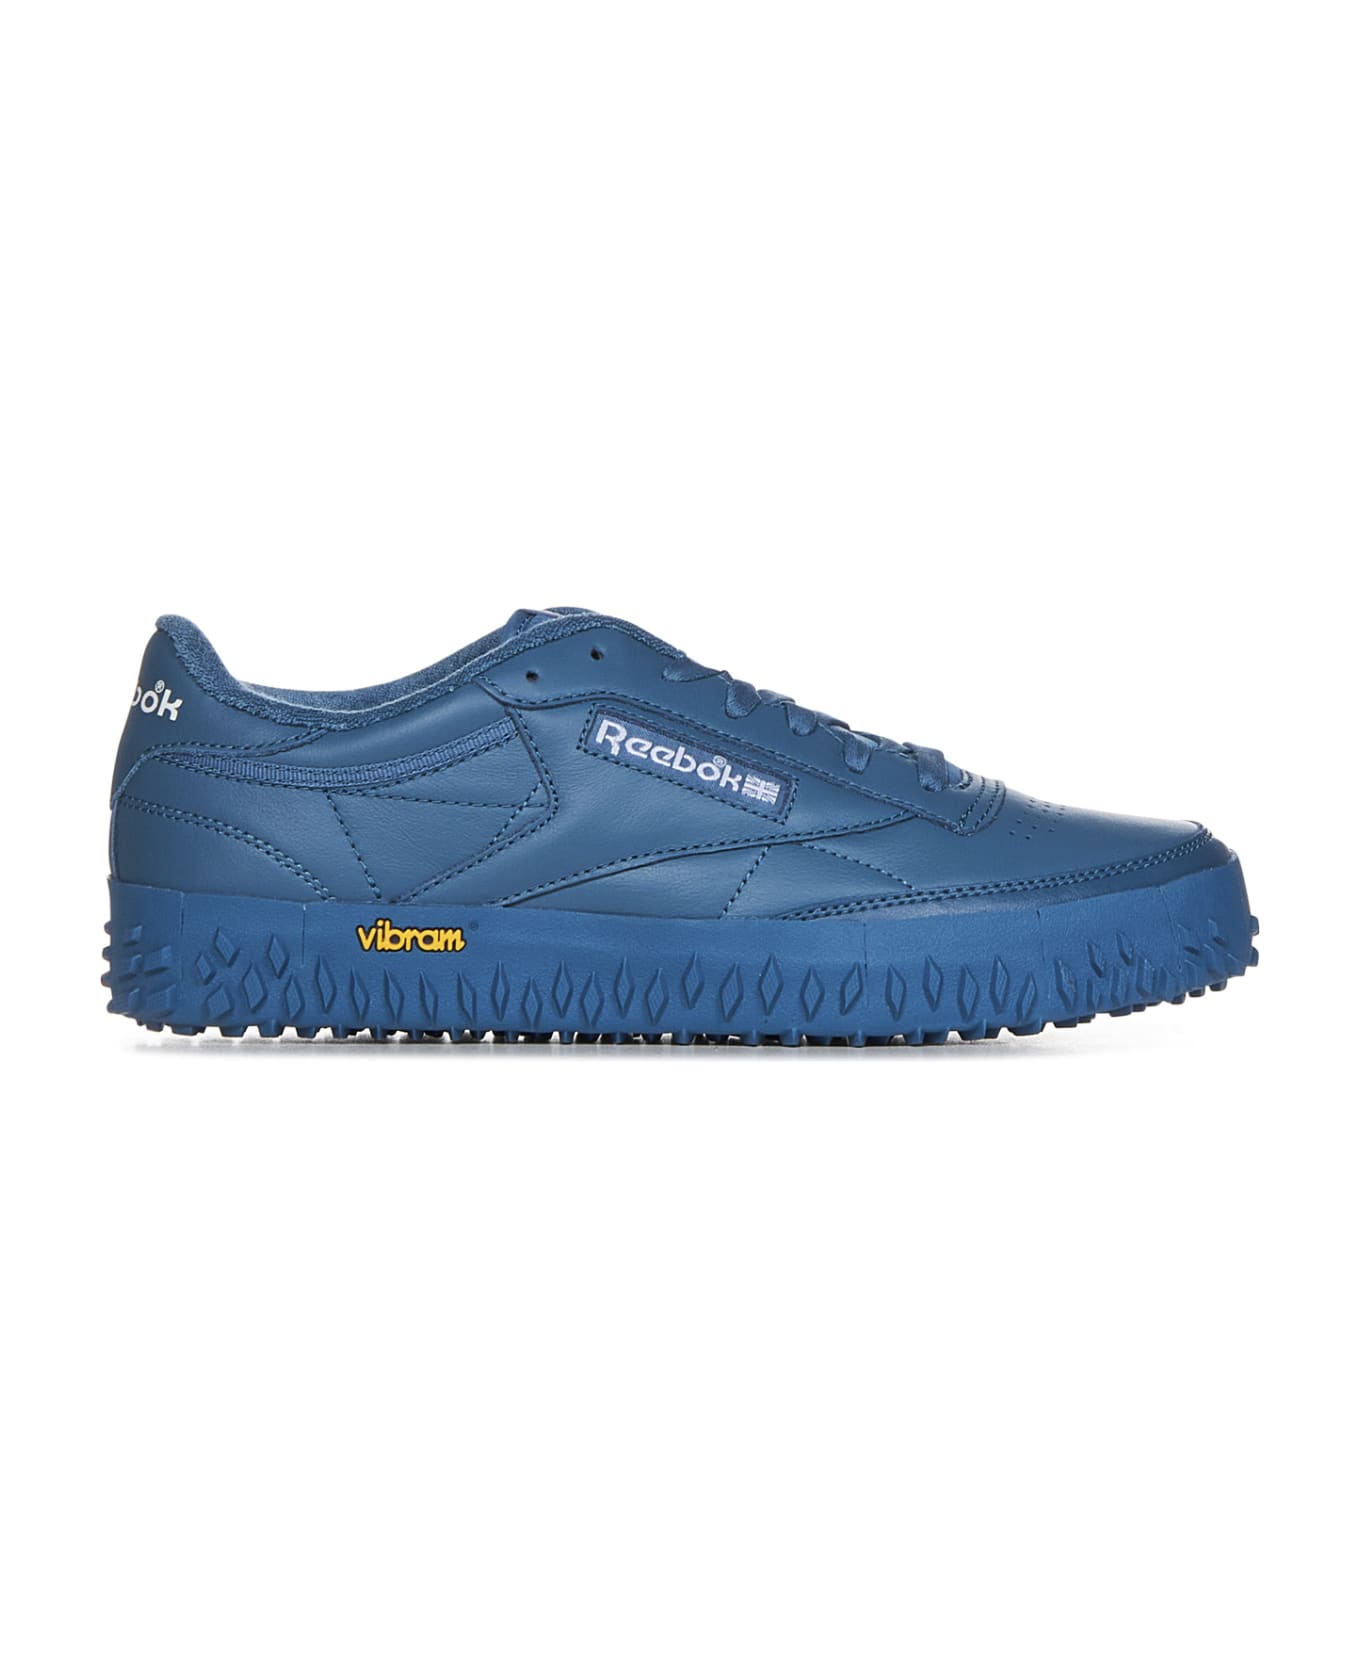 Reebok Club C Vibram Sneakers - Blue